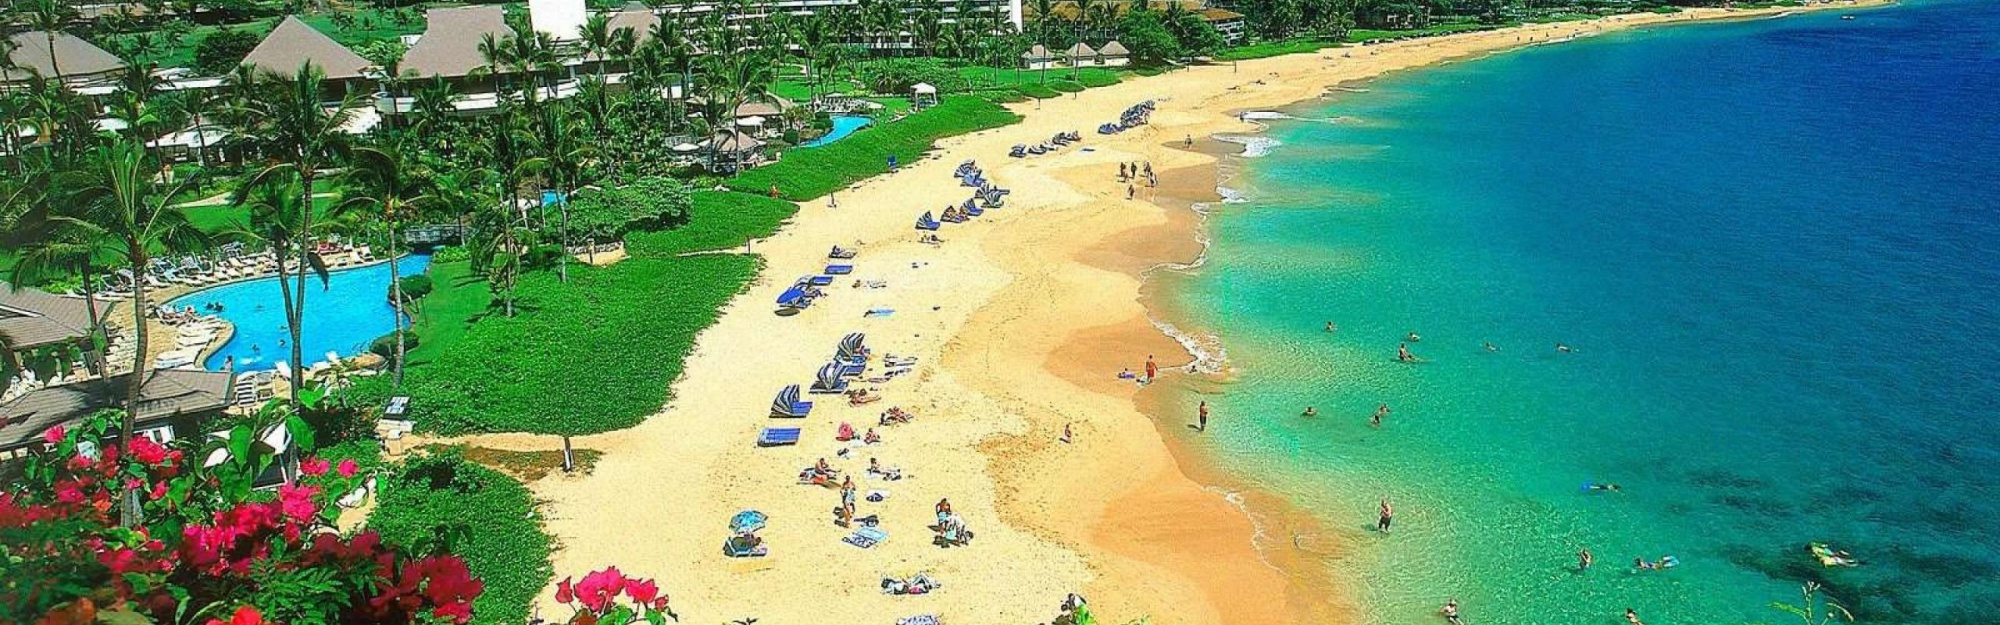 Beautiful Scenery Kaanapali Beach Maui Hawaii Archipelago United States World